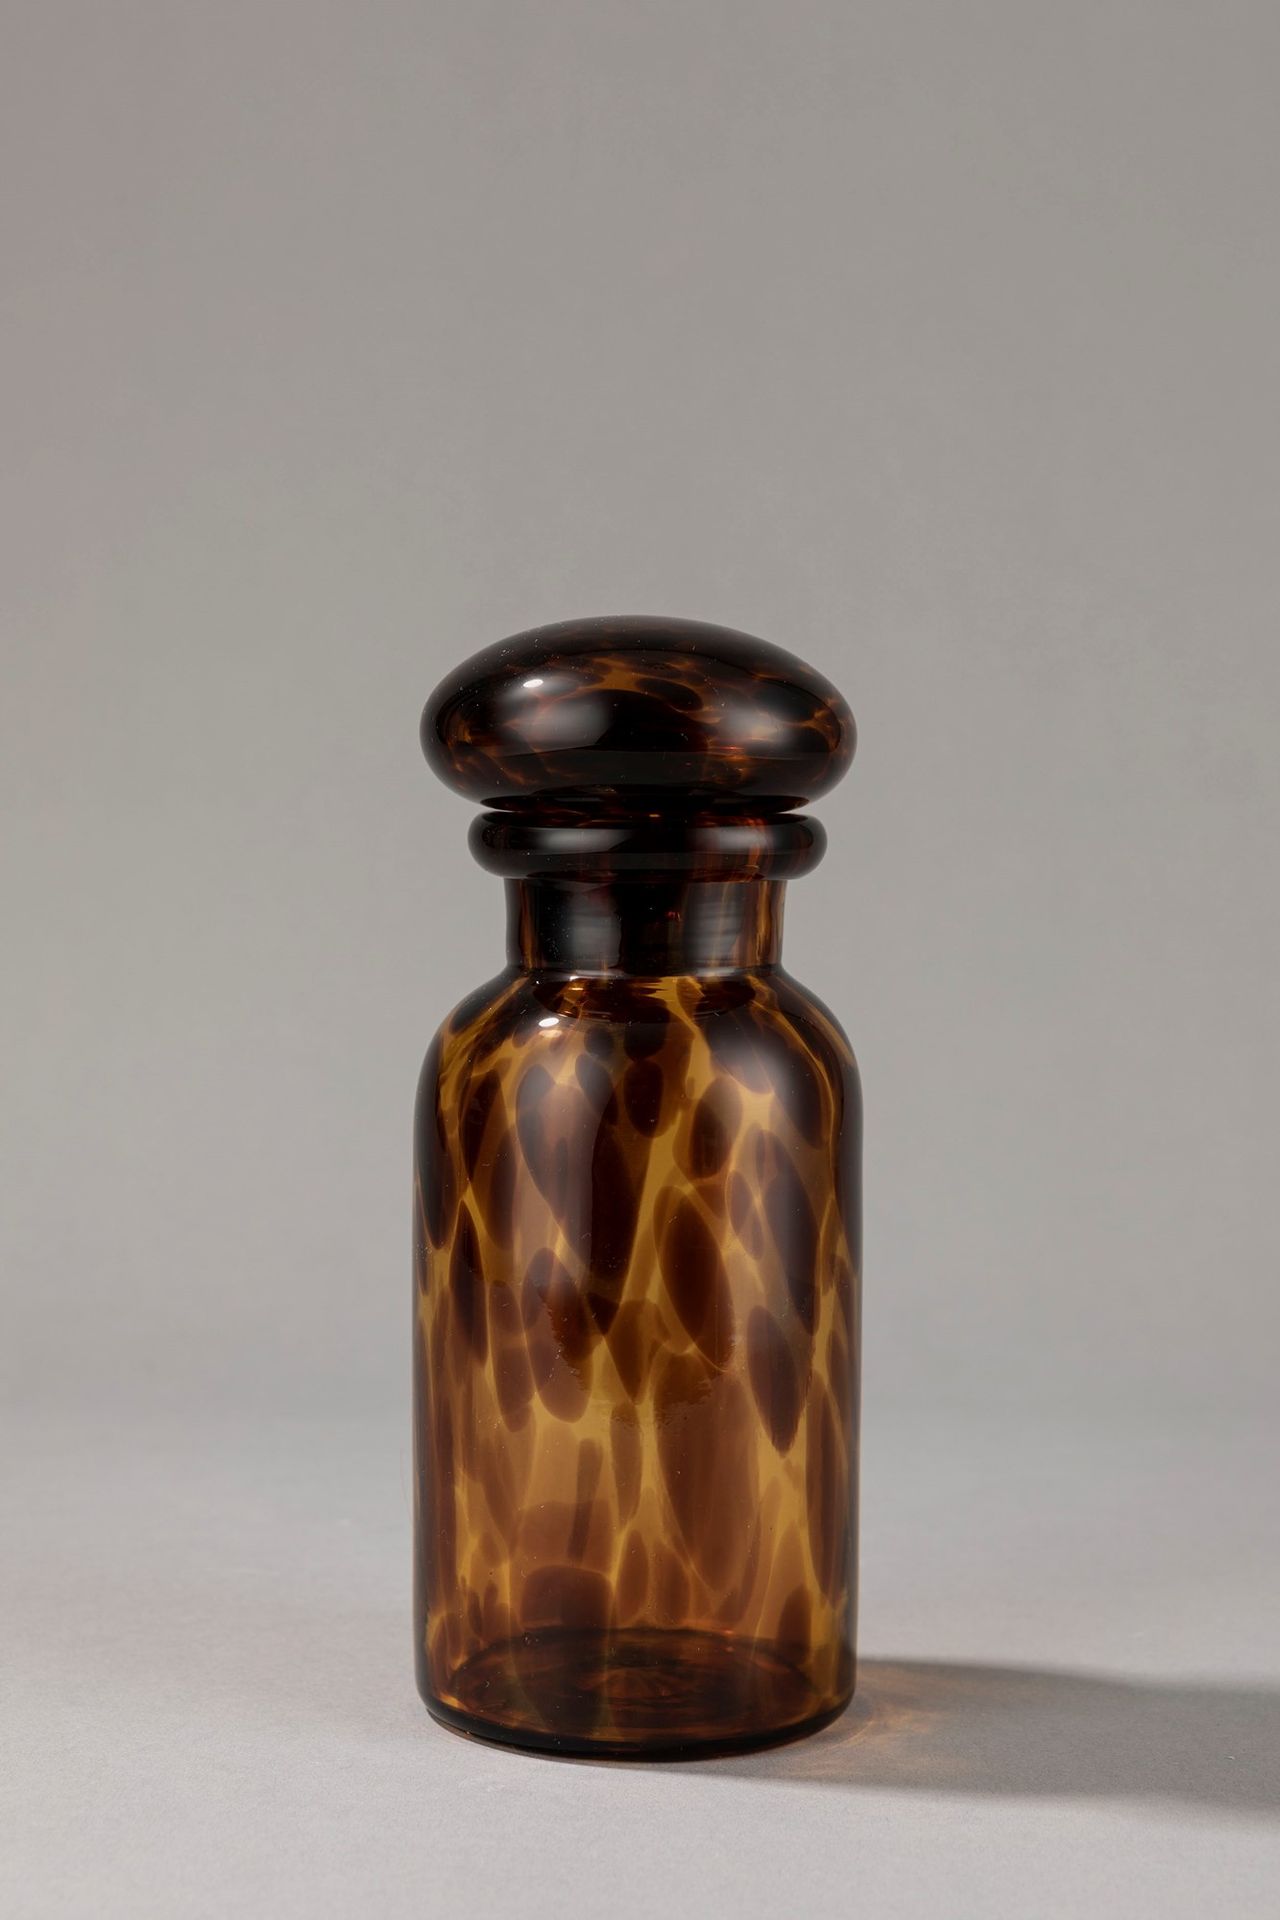 Barovier e Toso Flasche, 1970 ca.

H 20 x diam 10 cm
Muranoglas geblasen.